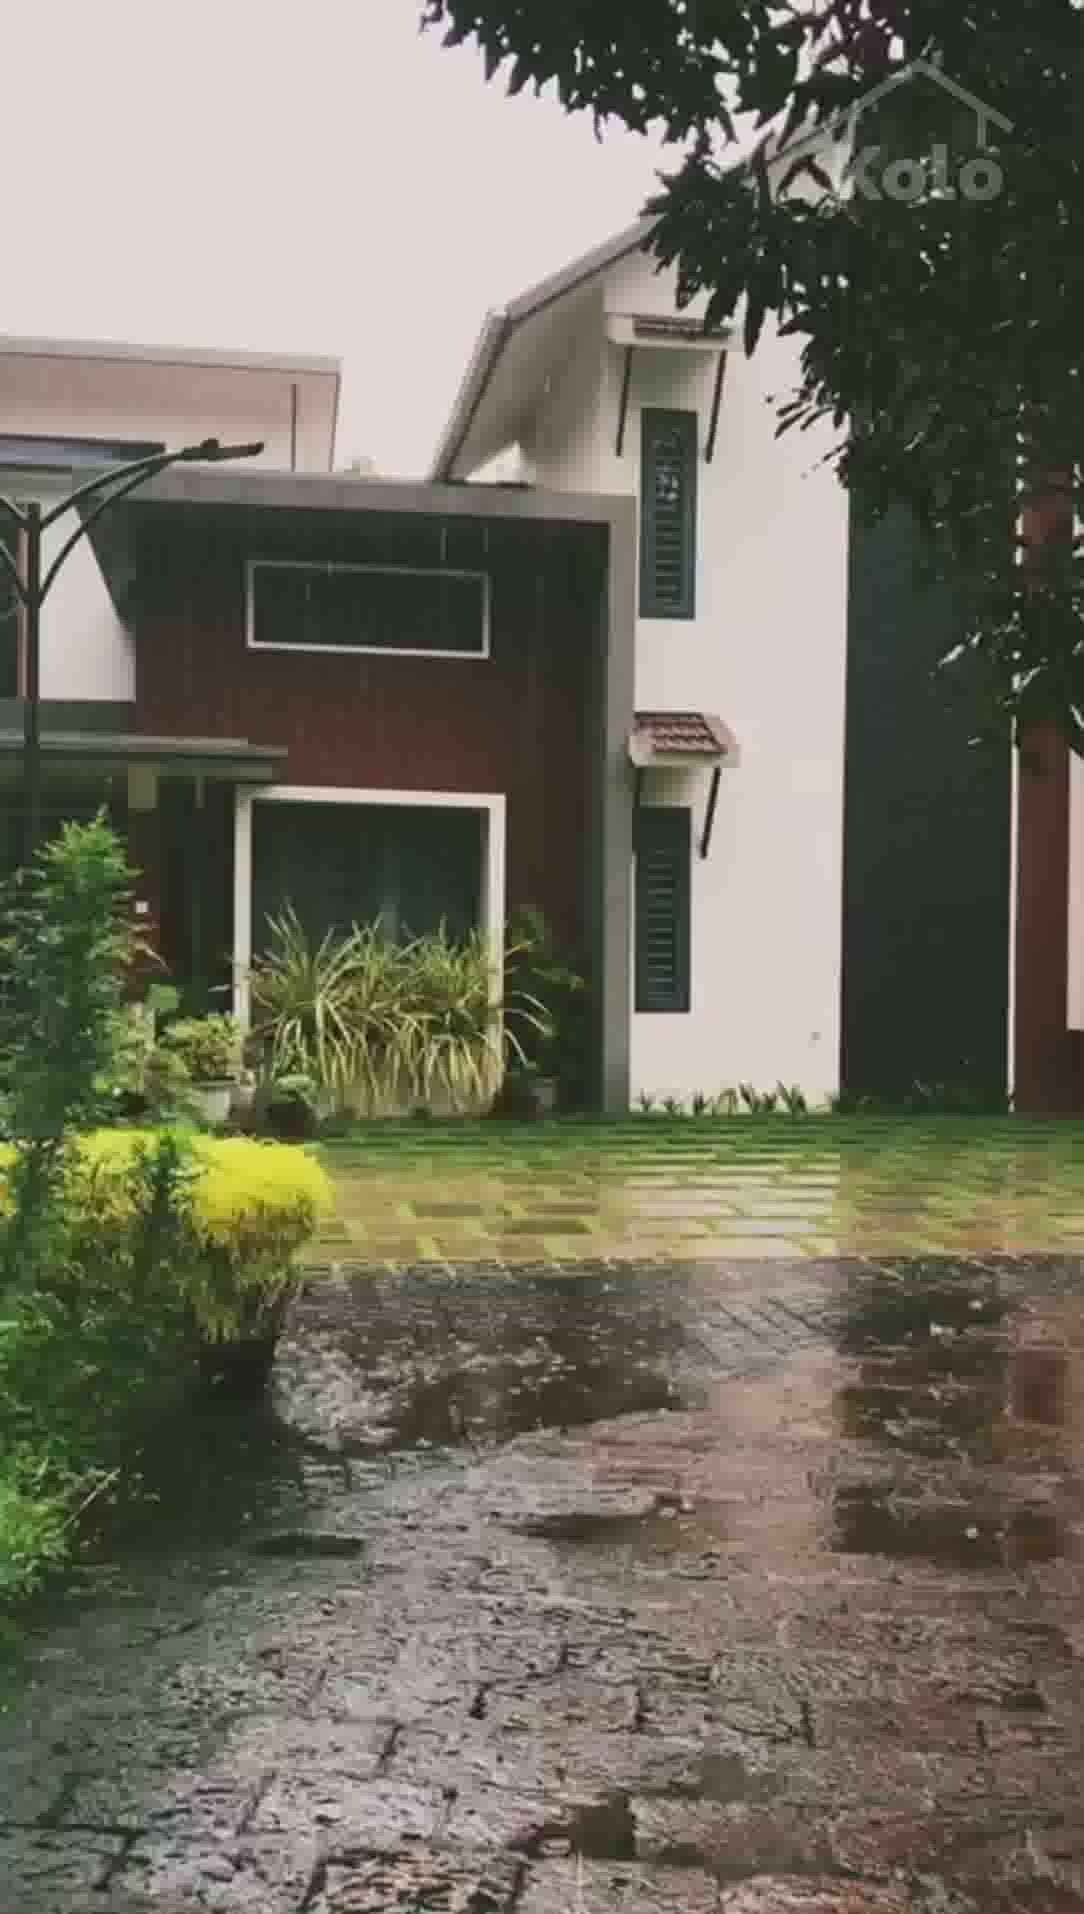 Jamsheer Pattasseri
Architect
Location: Calicut, Kerala

Kolo app video link: https://koloapp.in/posts/1628970369

Kolo - India’s Largest Home Construction Community :house:

#home #greenary #keralahouse #koloapp #keralagram #reelitfeelit #keralagodsowncountry #homedecor #enteveedu #homedesign #keralahomedesignz #keralavibes #instagood #interiordesign #interior #interiordesigner #homedecoration #homedesign #homedesignideas #keralahomes #homedecor #homes #homestyling #traditional #kerala #homesweethome #architecturedesign #architecture #keralaarchitecture #architecture